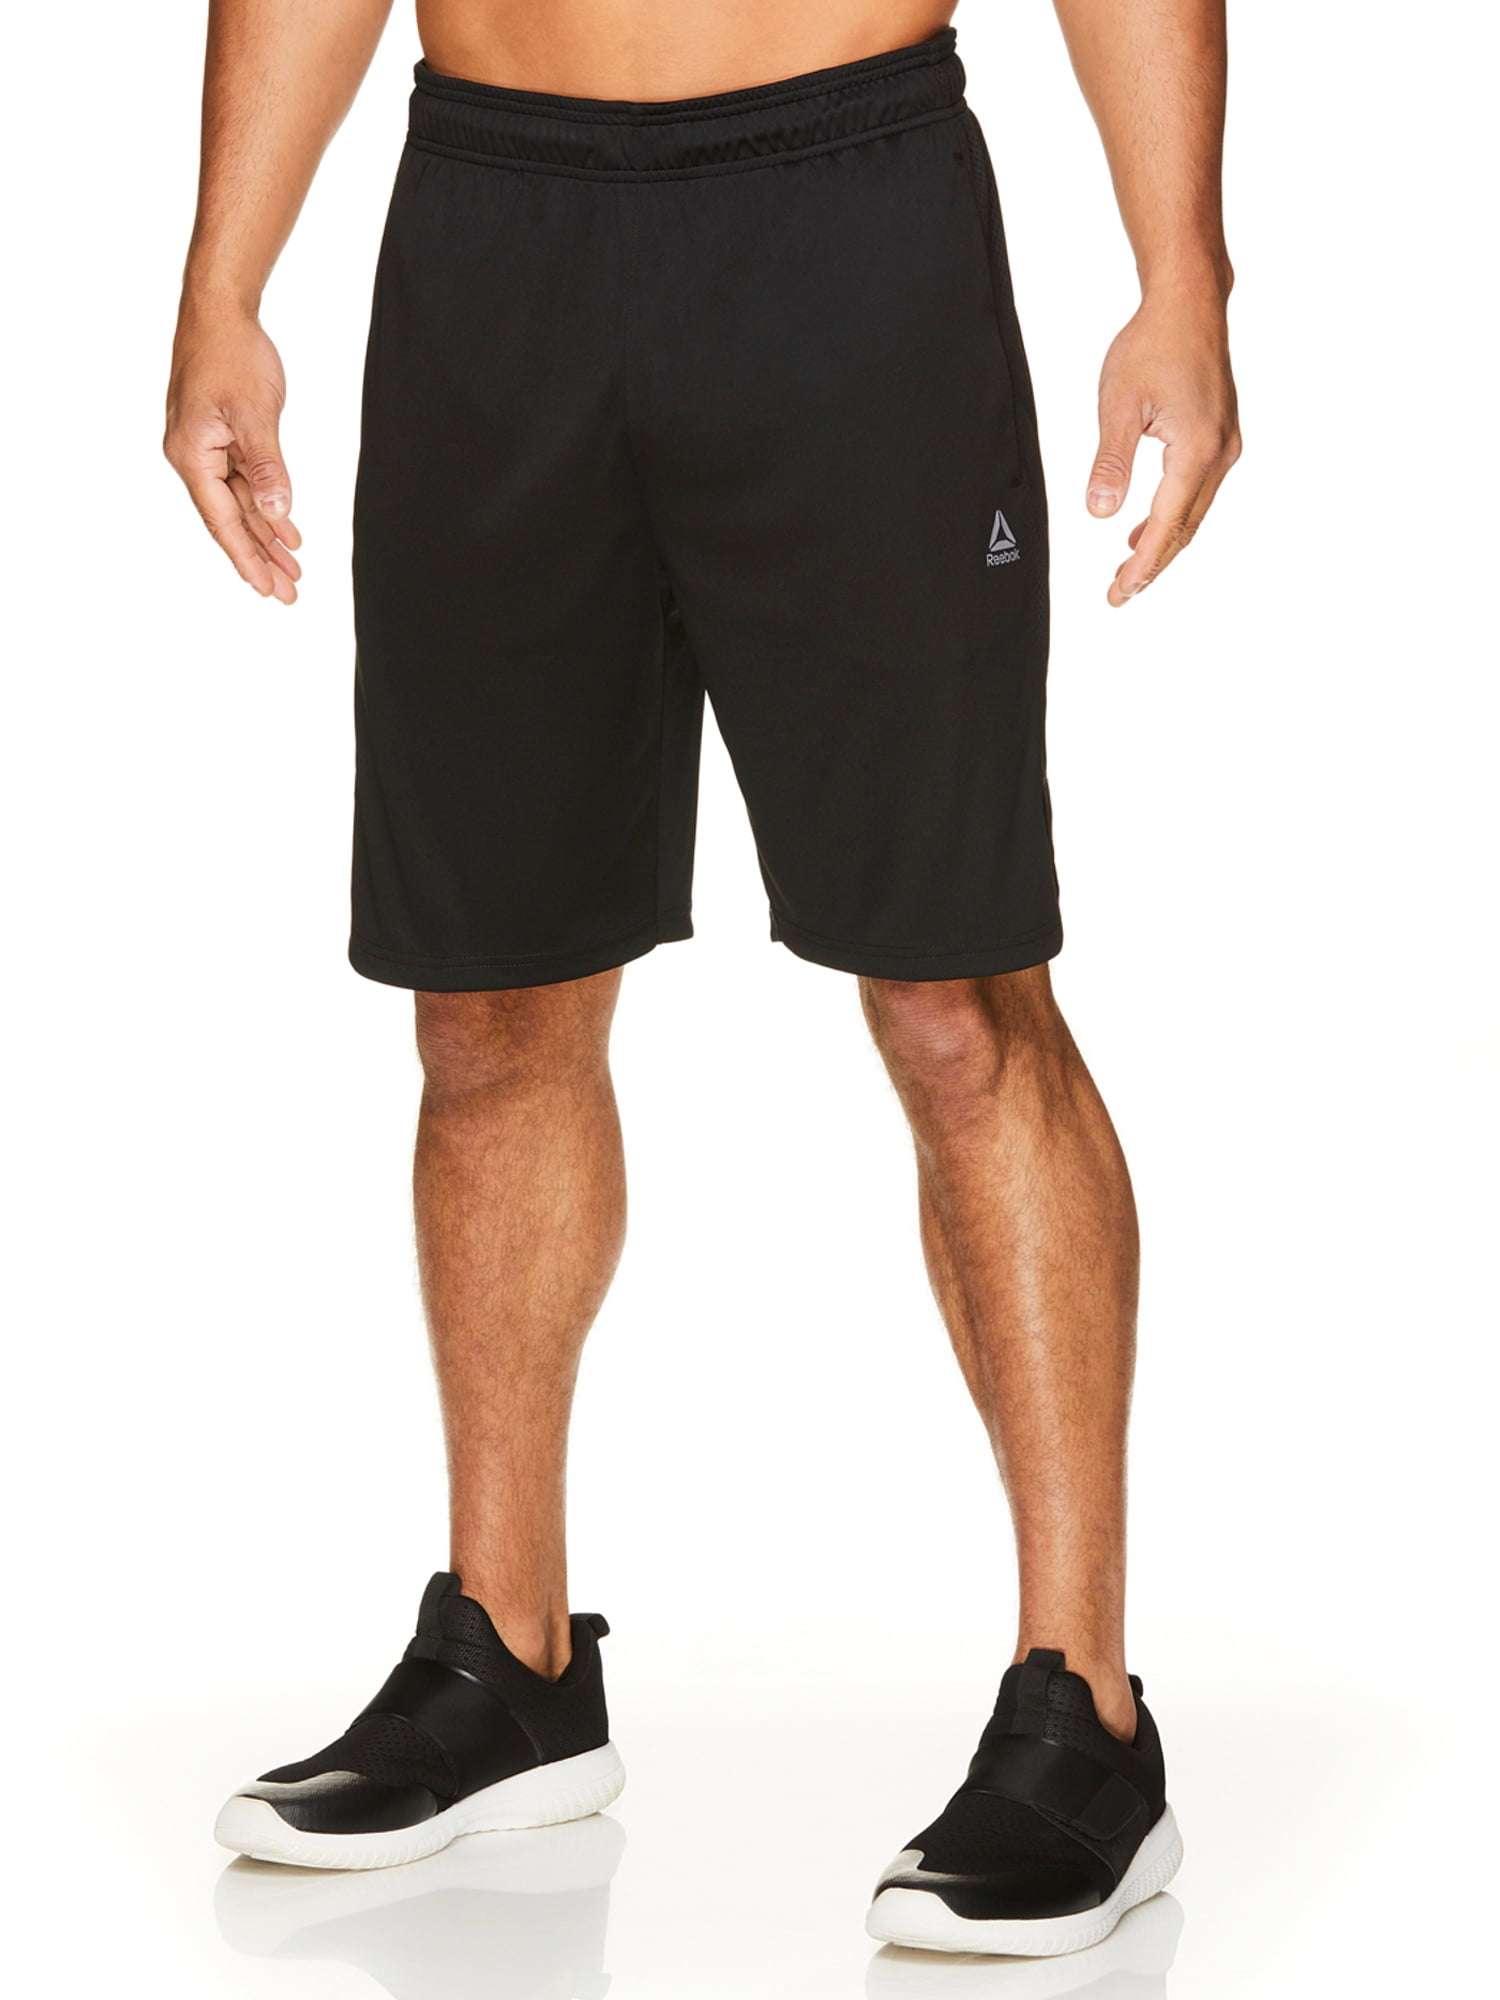 Reebok Men's Fixed Training Shorts - Walmart.com